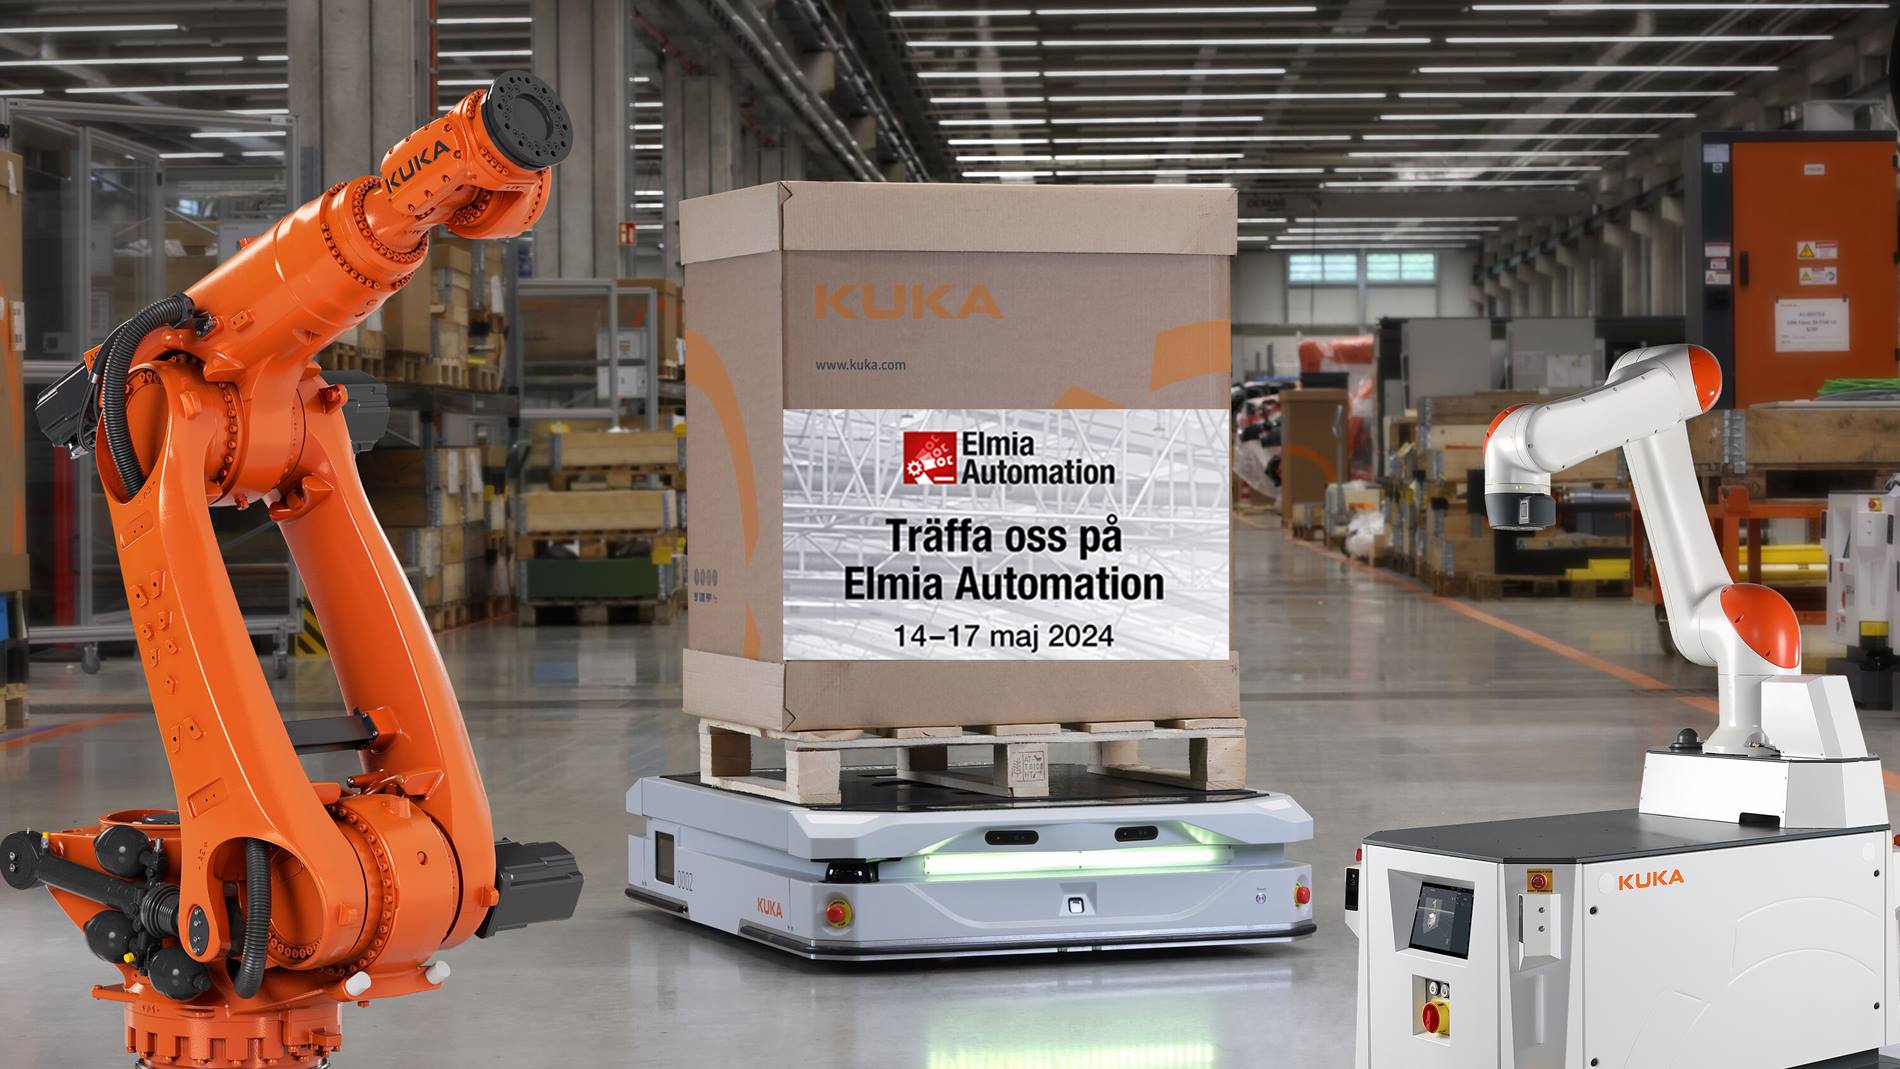 Elmia Automation KUKA Nordic 2024